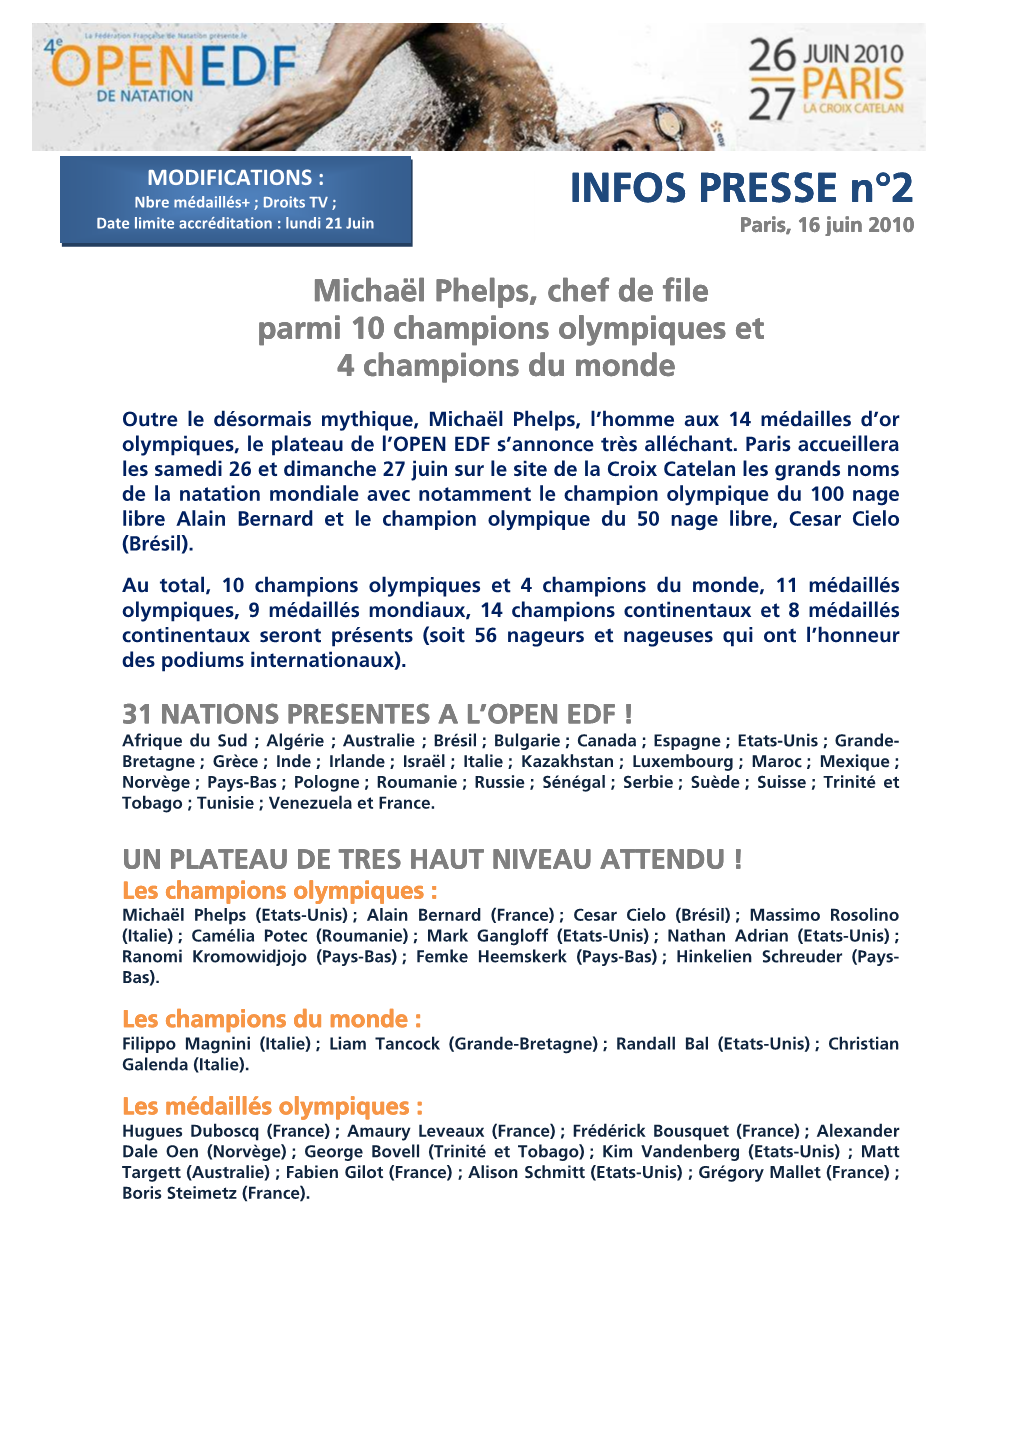 INFOS PRESSE N°2 Date Limite Accréditation : Lundi 21 Juin Paris, 1 666 Juin 2010